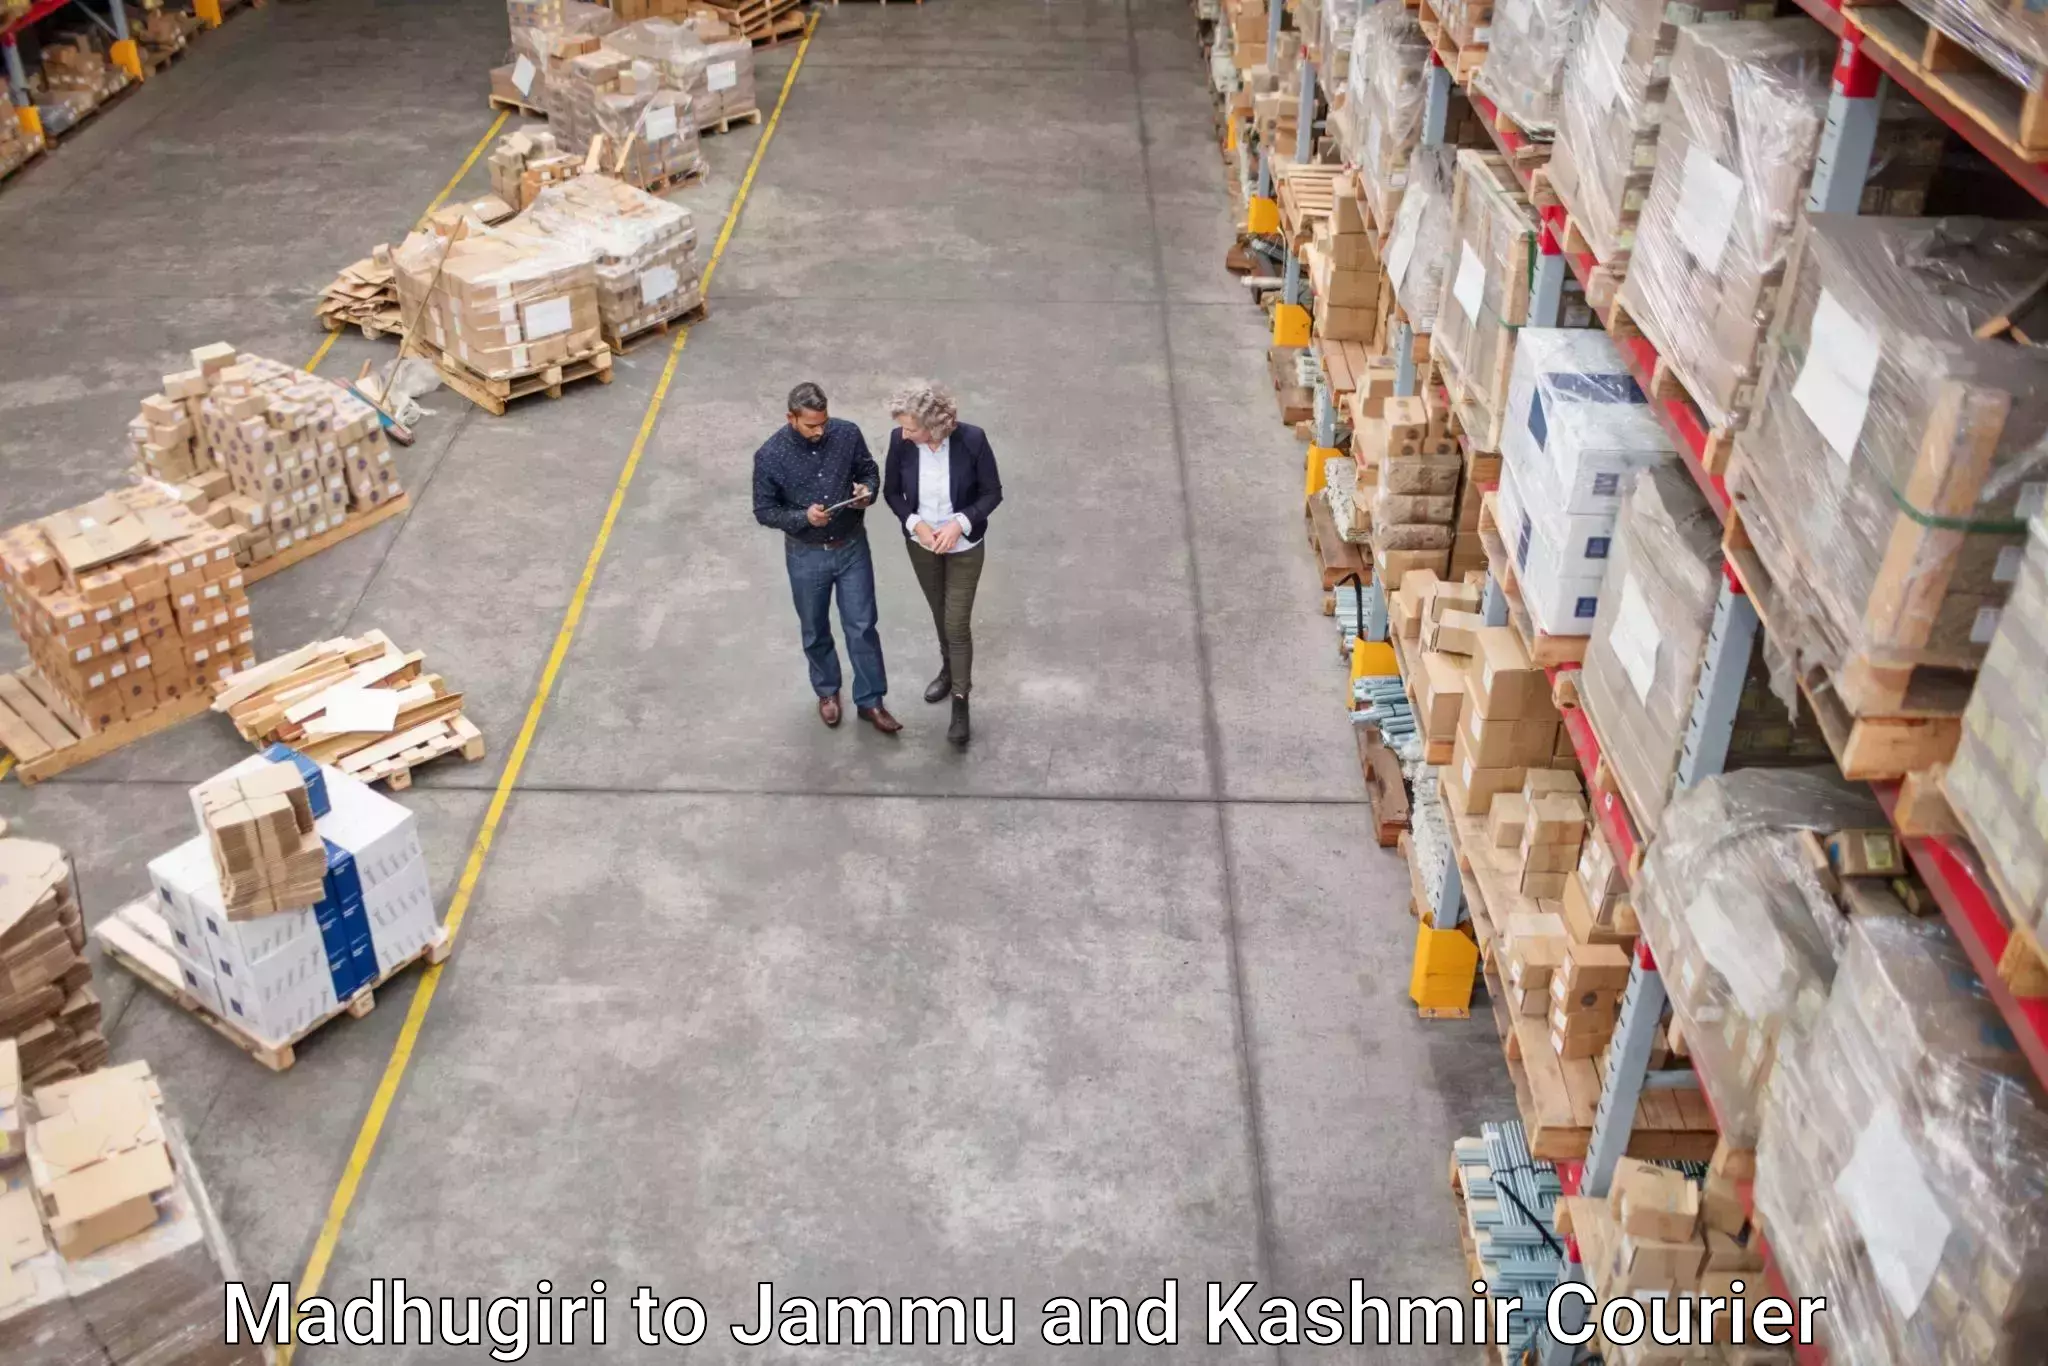 Express package handling in Madhugiri to Jammu and Kashmir